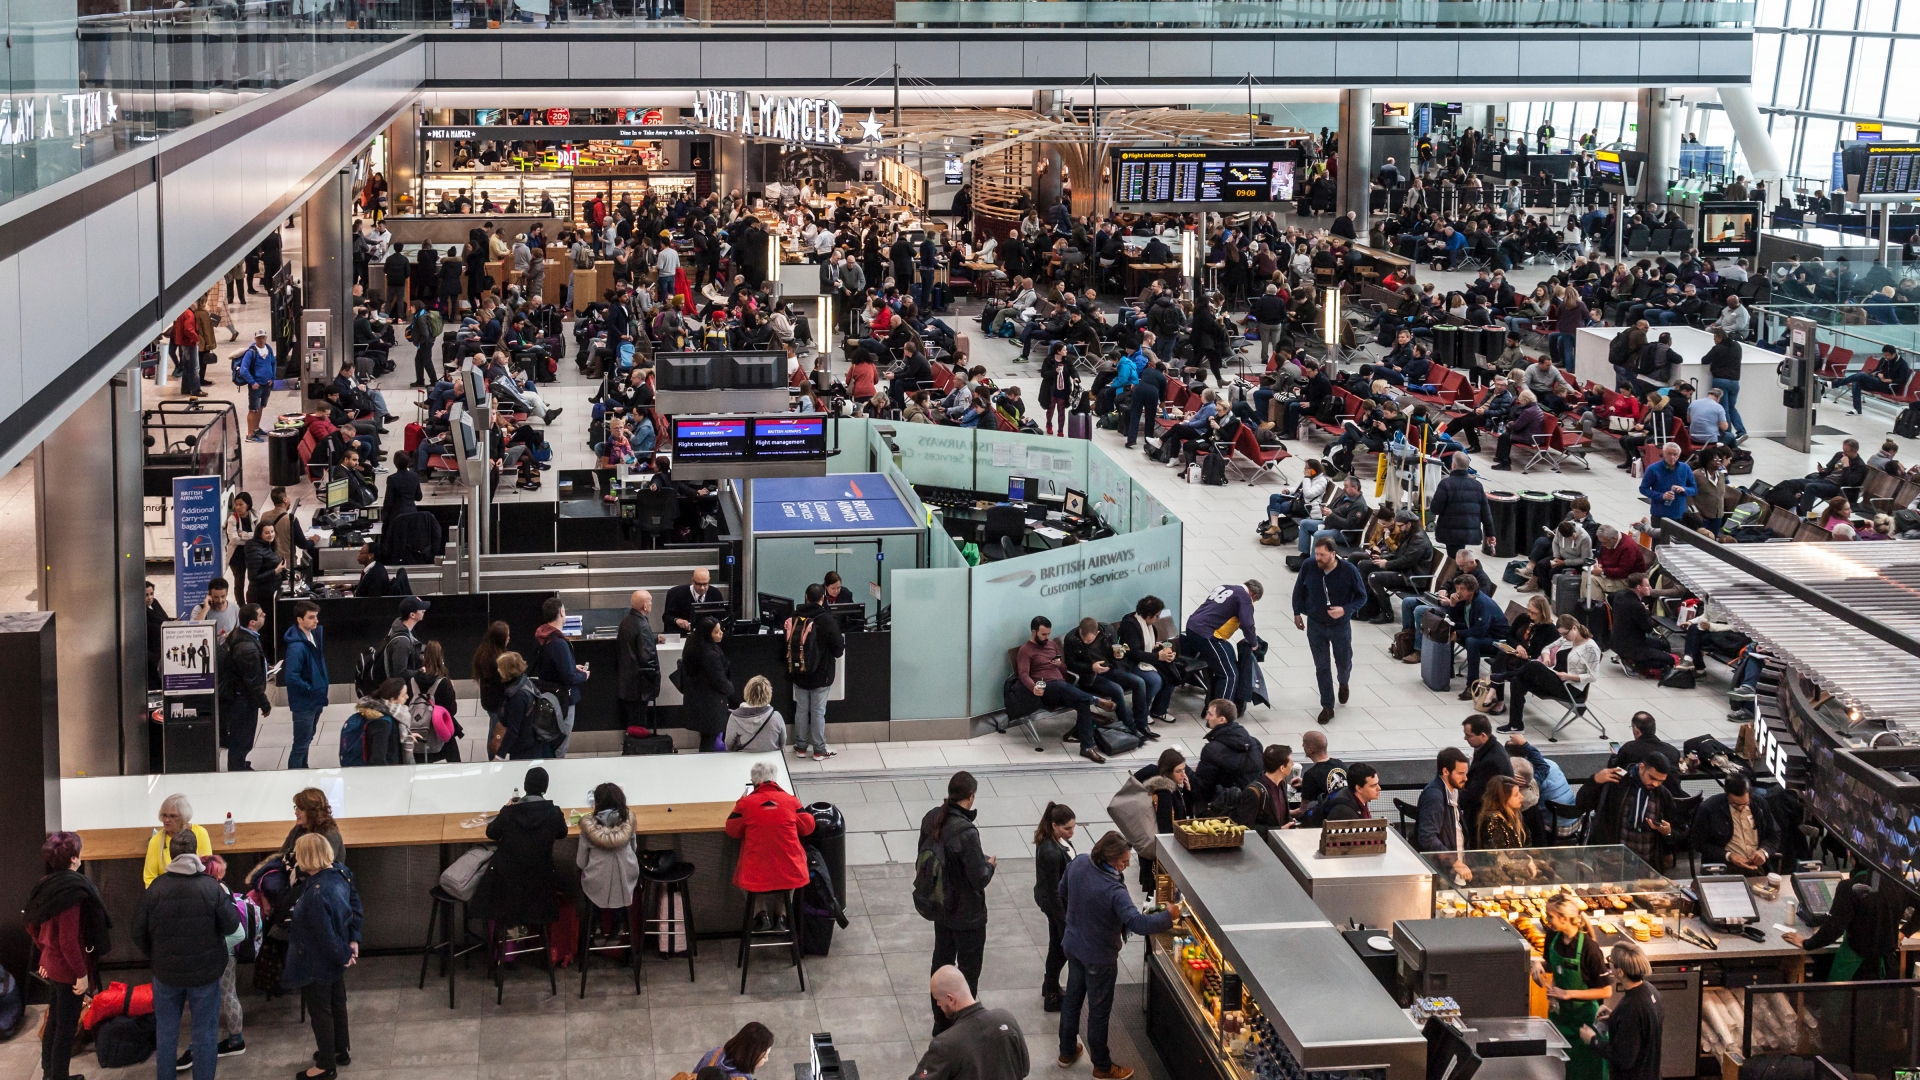 Heathrow Airport extends the flight cap to October, affecting half-term holidays